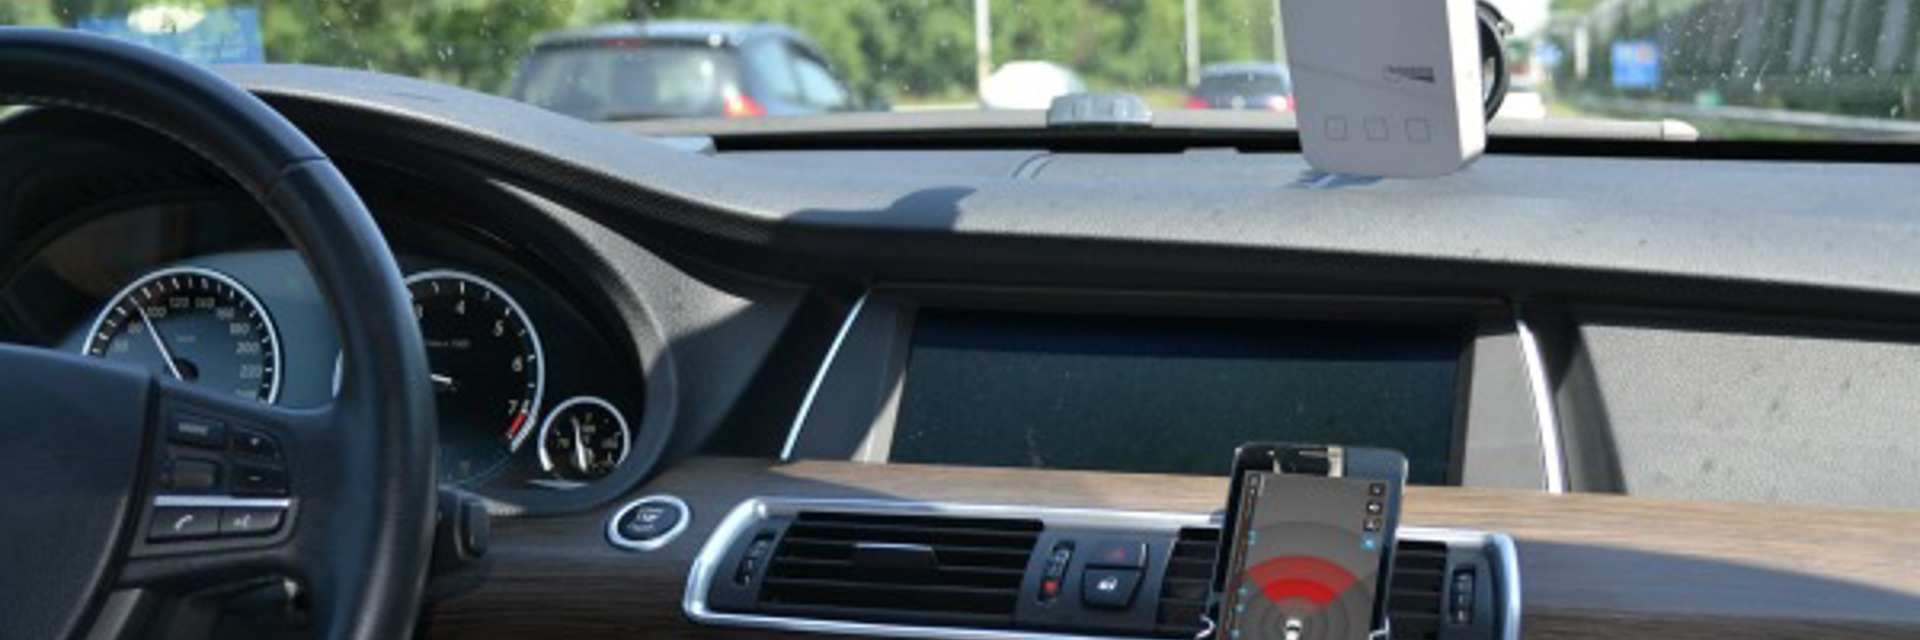 Foto van autodashboard met telefoon en device genaamd FLowradar